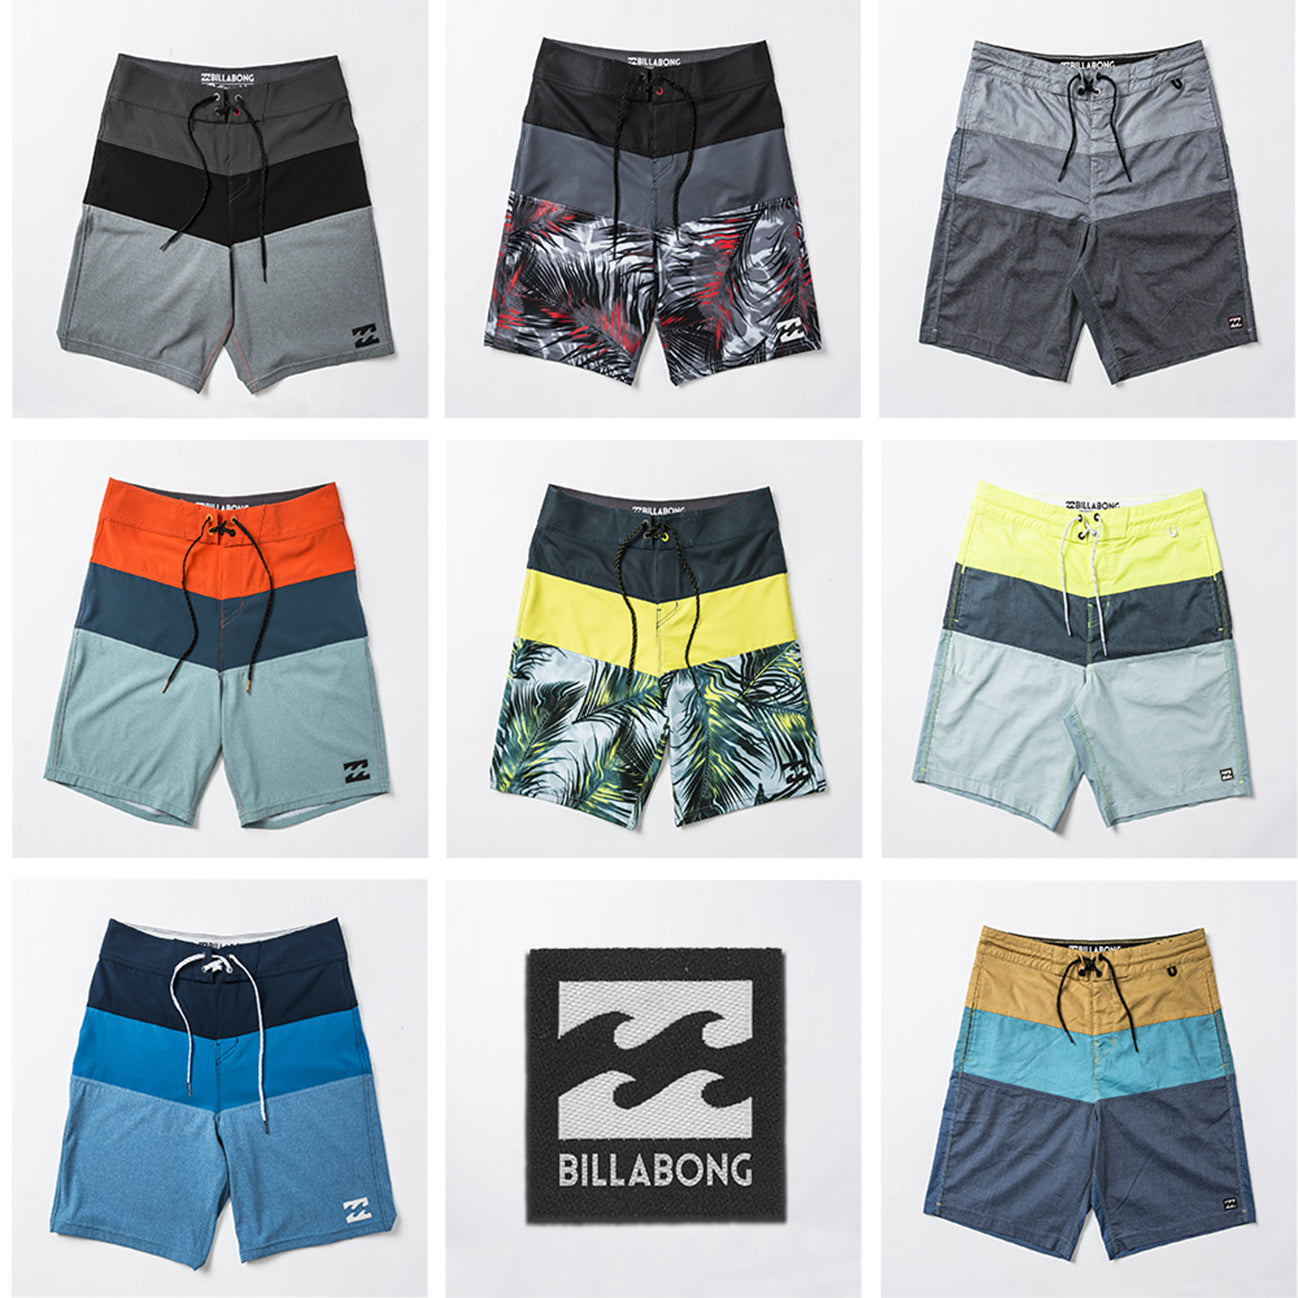 2016 Billabong Mens Summer Swim Boardshort collection